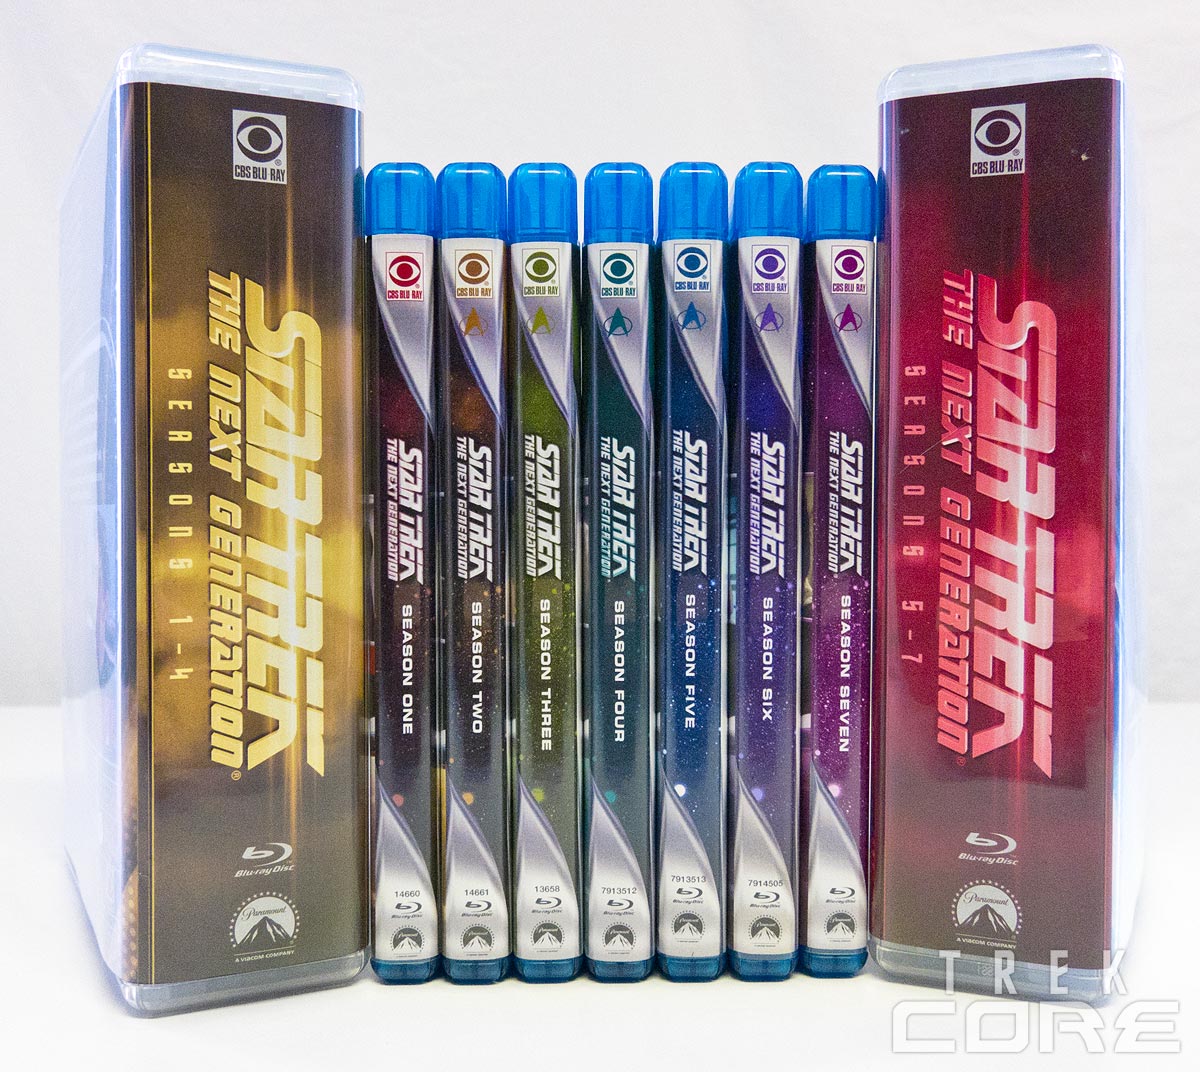 North America's STAR TREK: TNG Blu-ray Box Set is Here! • TrekCore.com